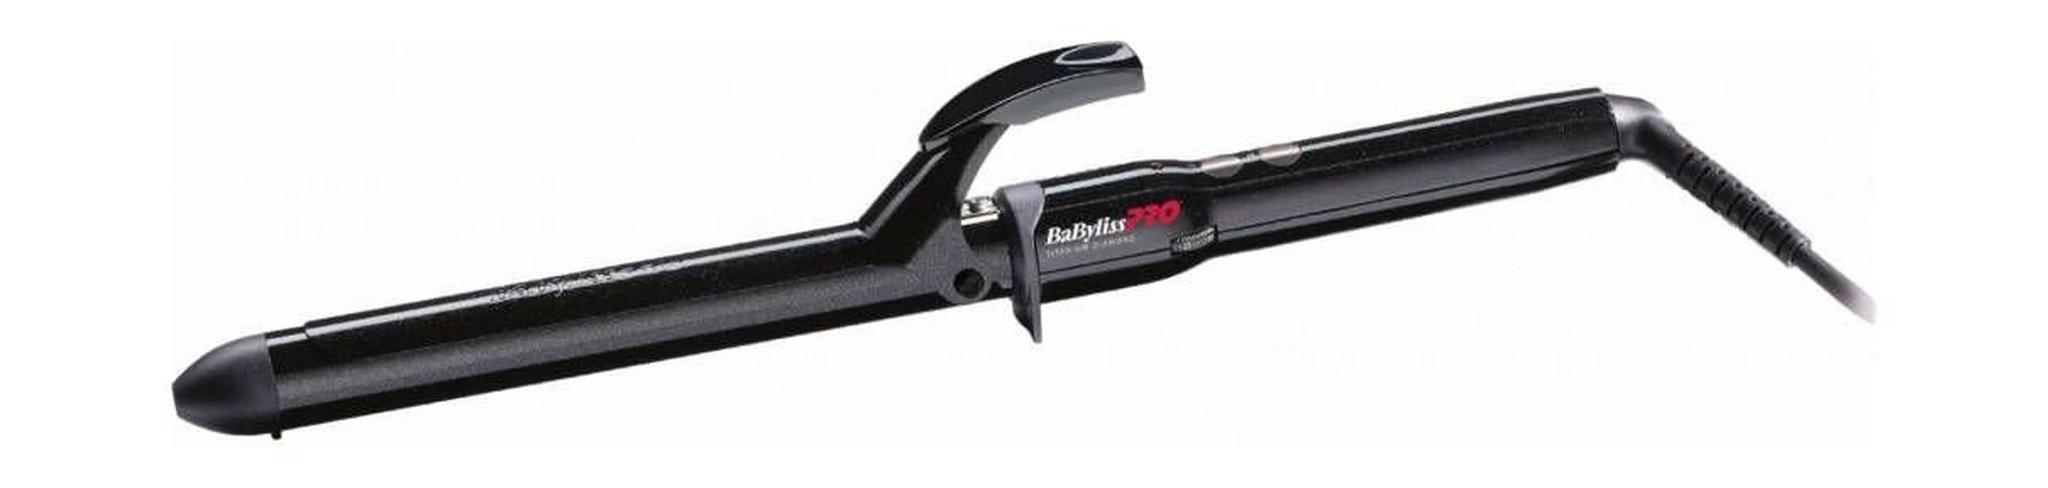 Babyliss Pro Titanium Diamond Hair Curler Iron, 25mm, 60W, BAB2473TDE - Black